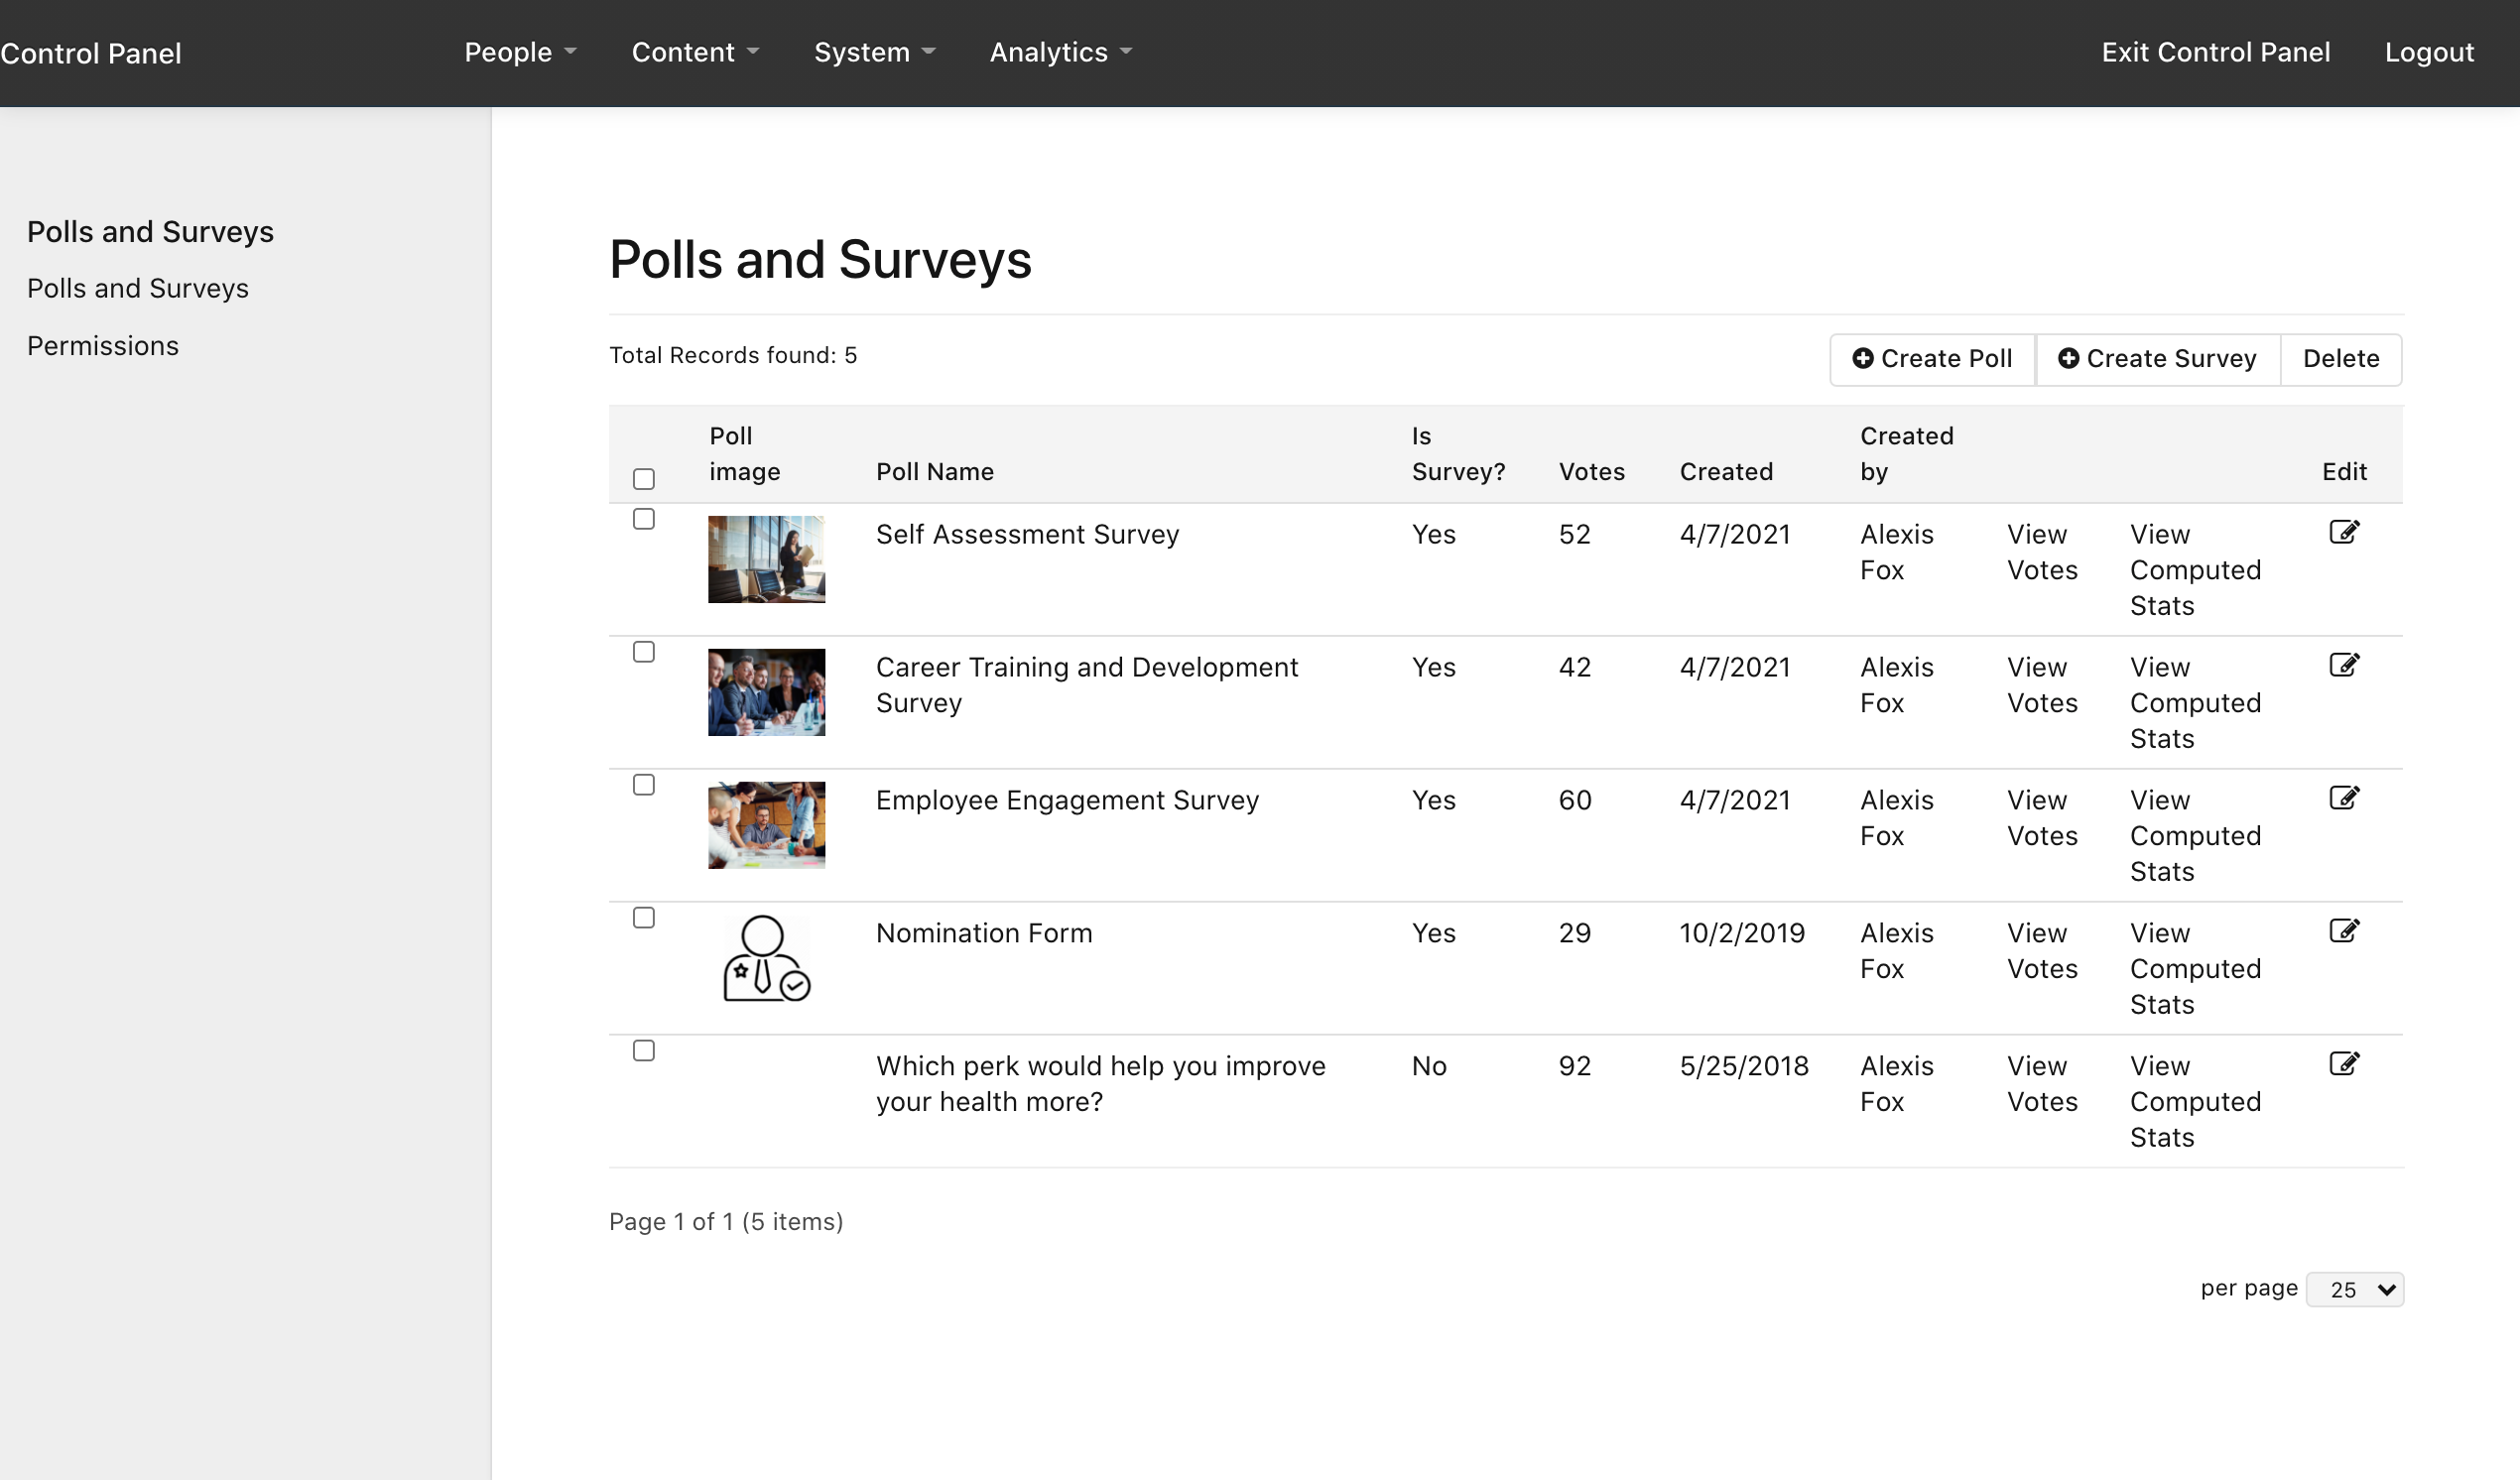 Control Panel > Content > Polls and Surveys